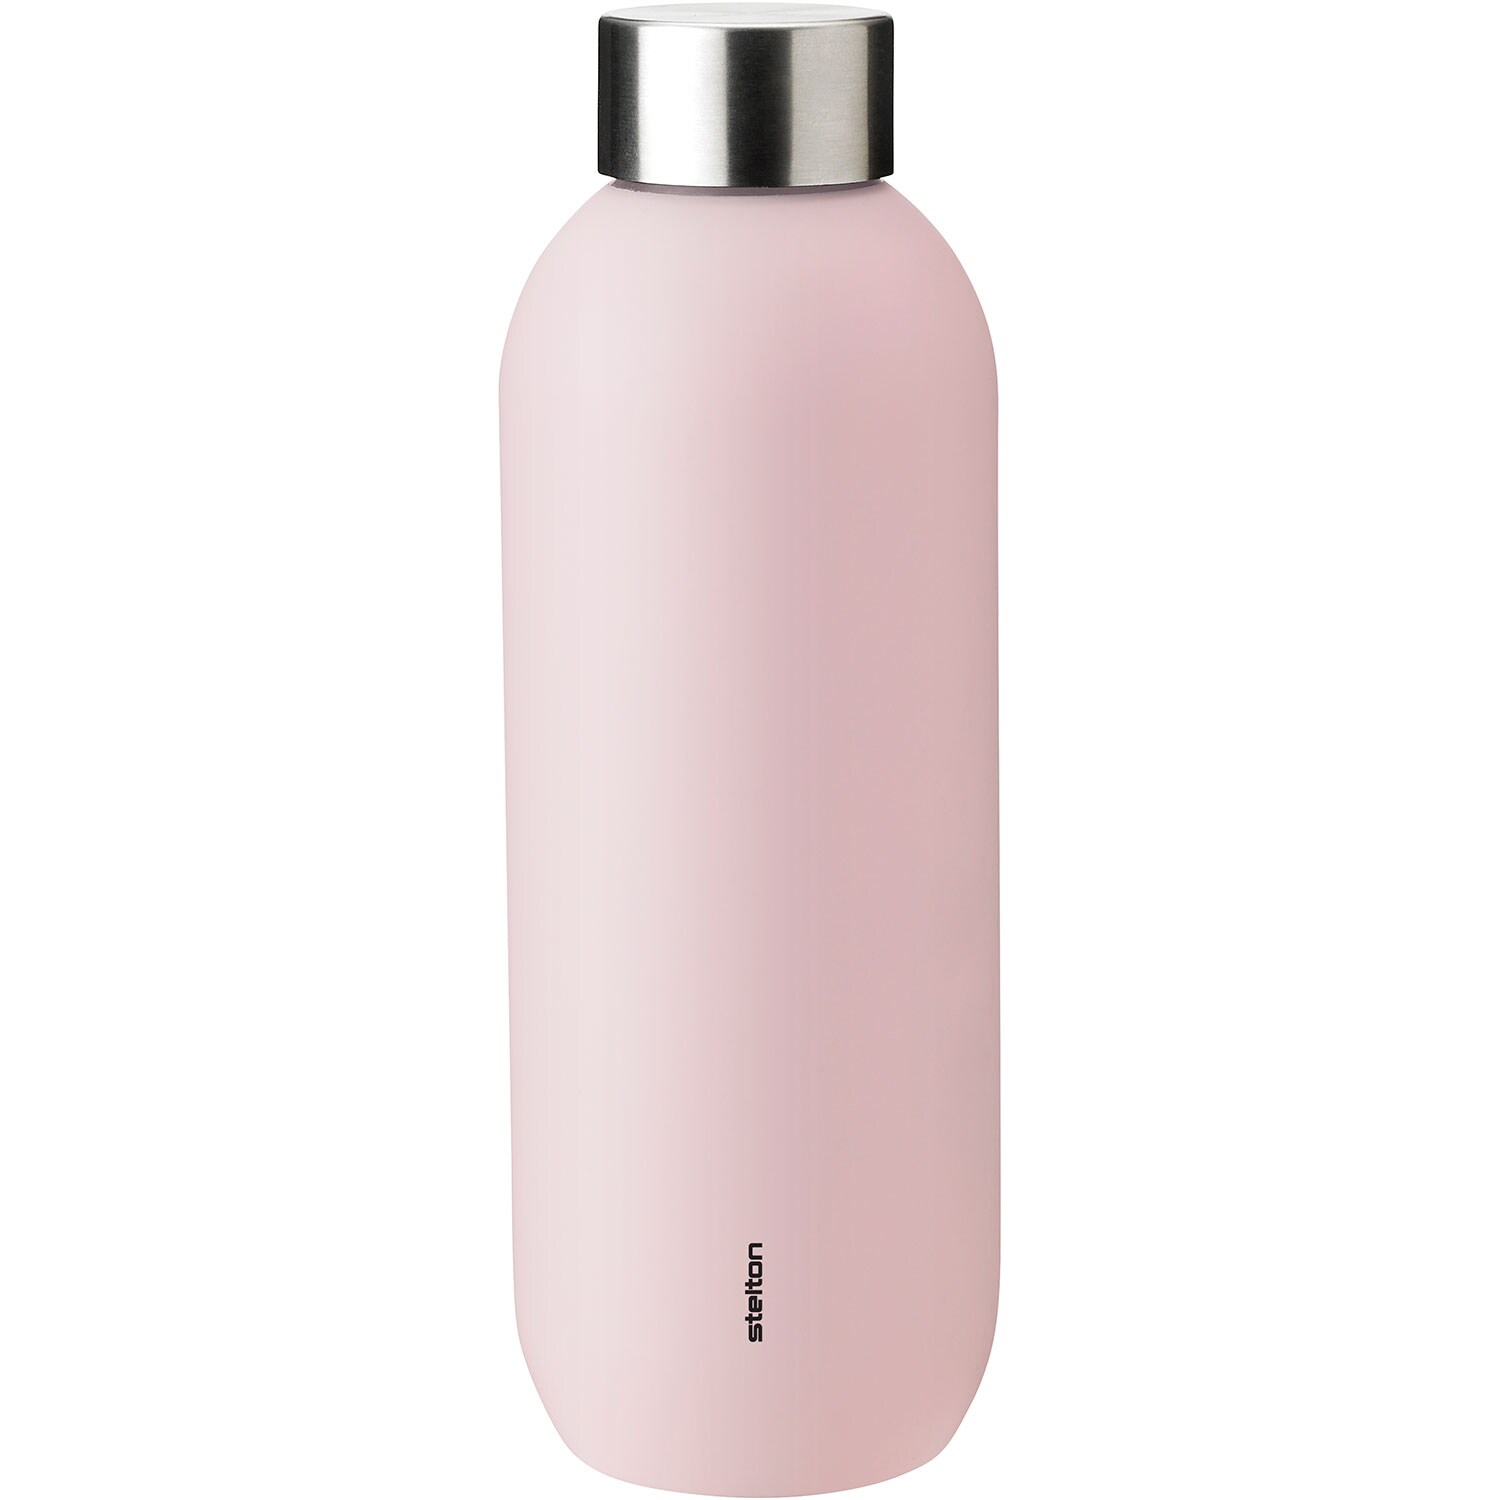 https://royaldesign.com/image/2/stelton-keep-cool-thermo-drinking-bottle-60-cl-41